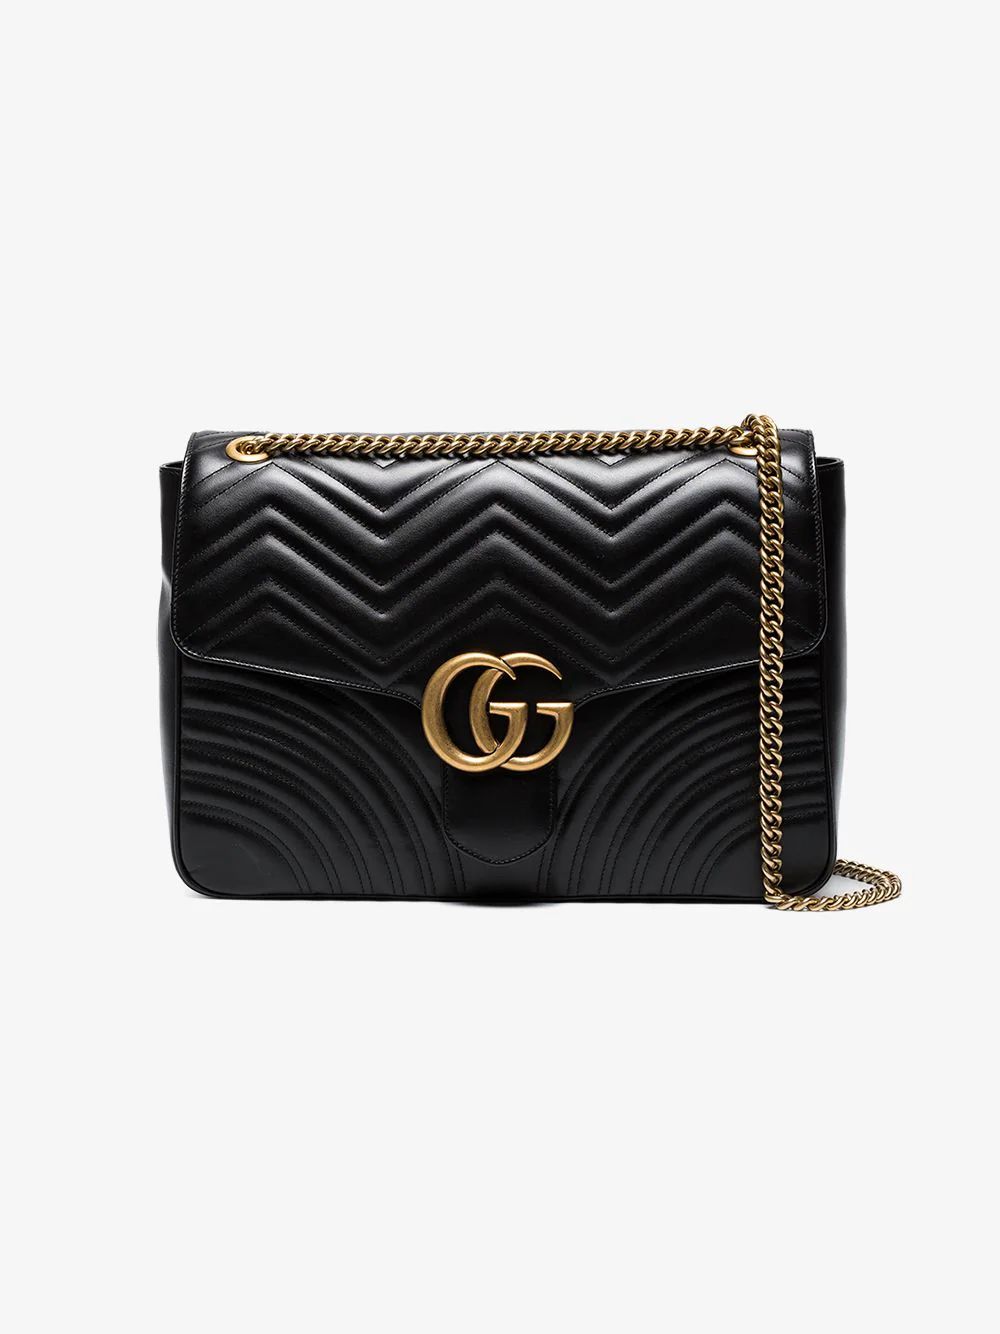 Gucci Black GG Marmont large leather shoulder bag | Browns Fashion